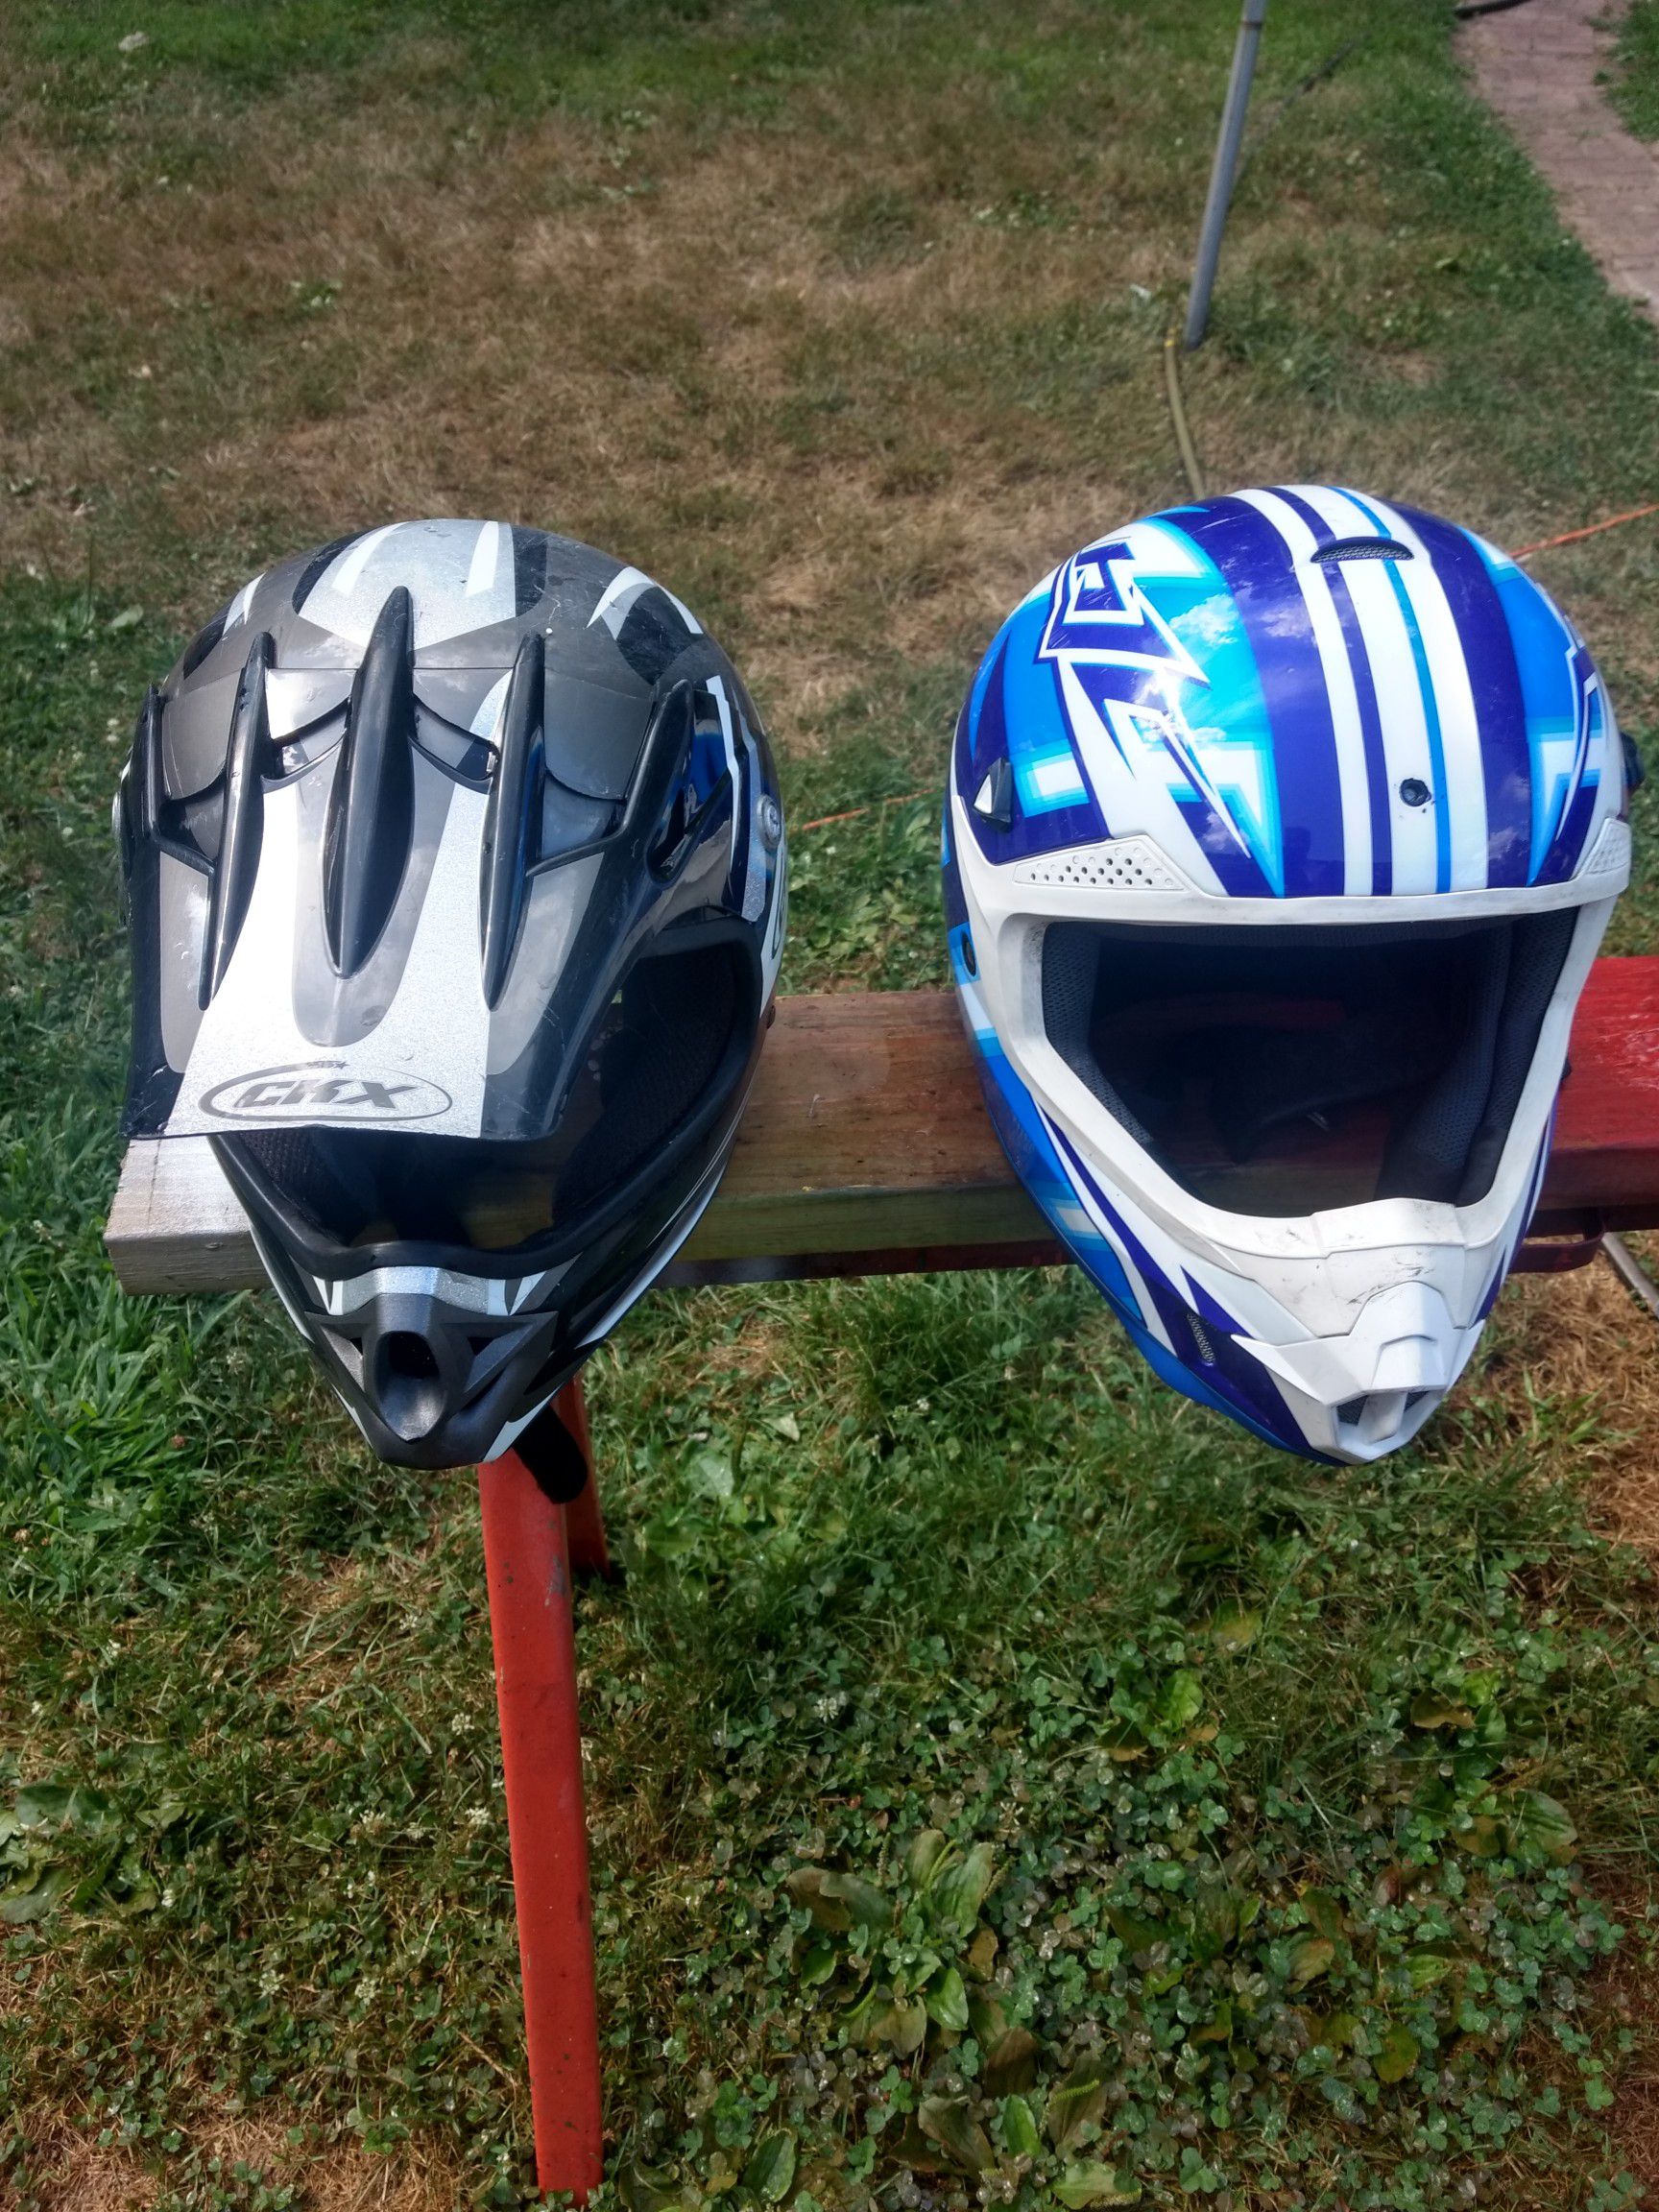 2 helmets 35.00 each